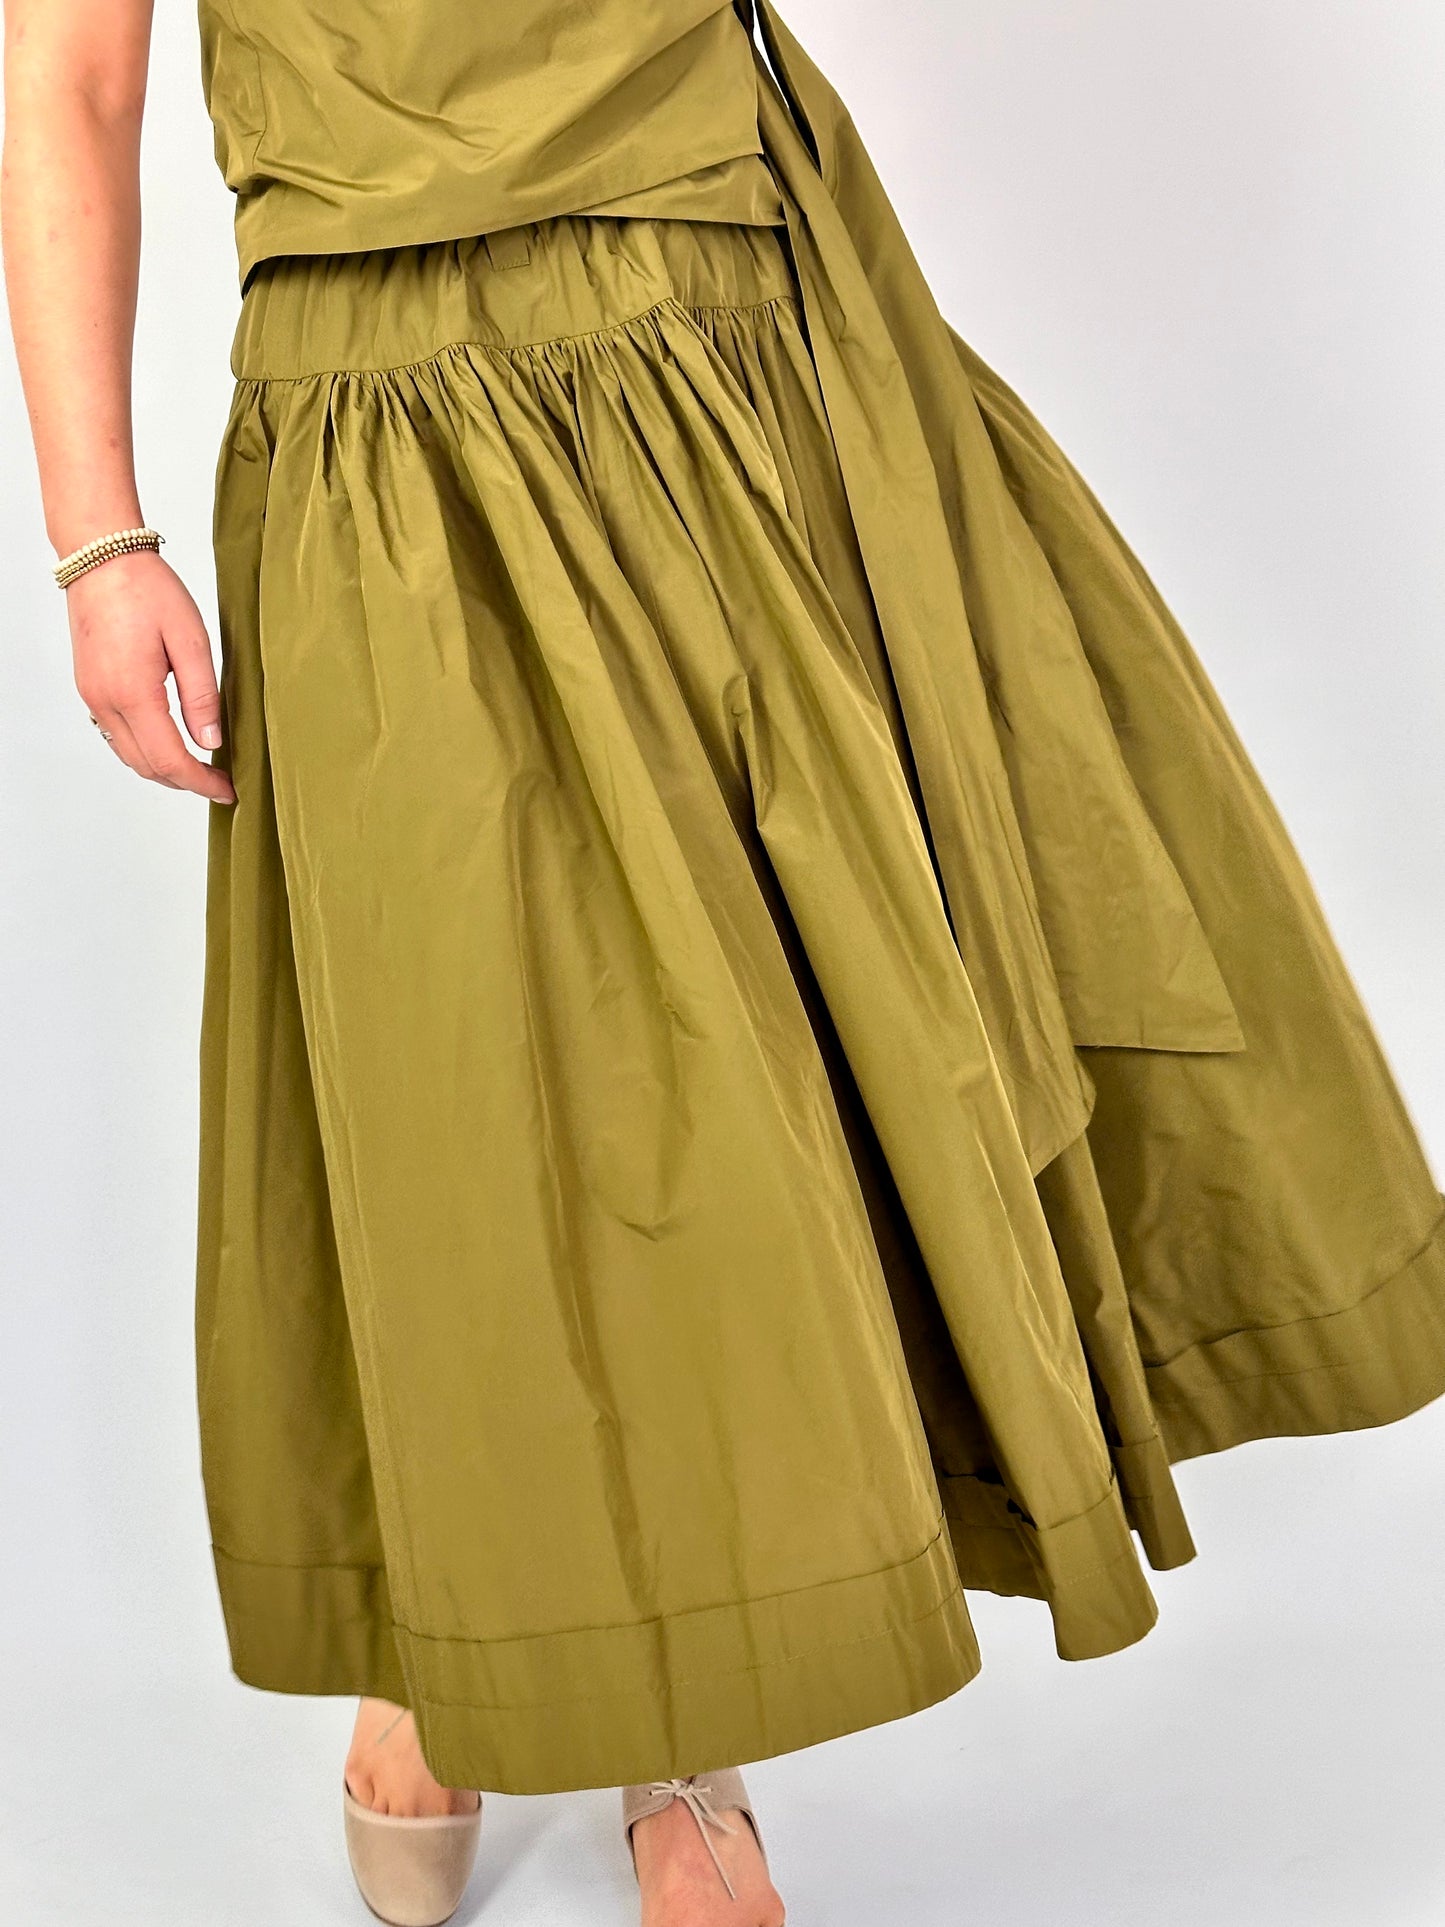 LFDA 613 Skirt Gold